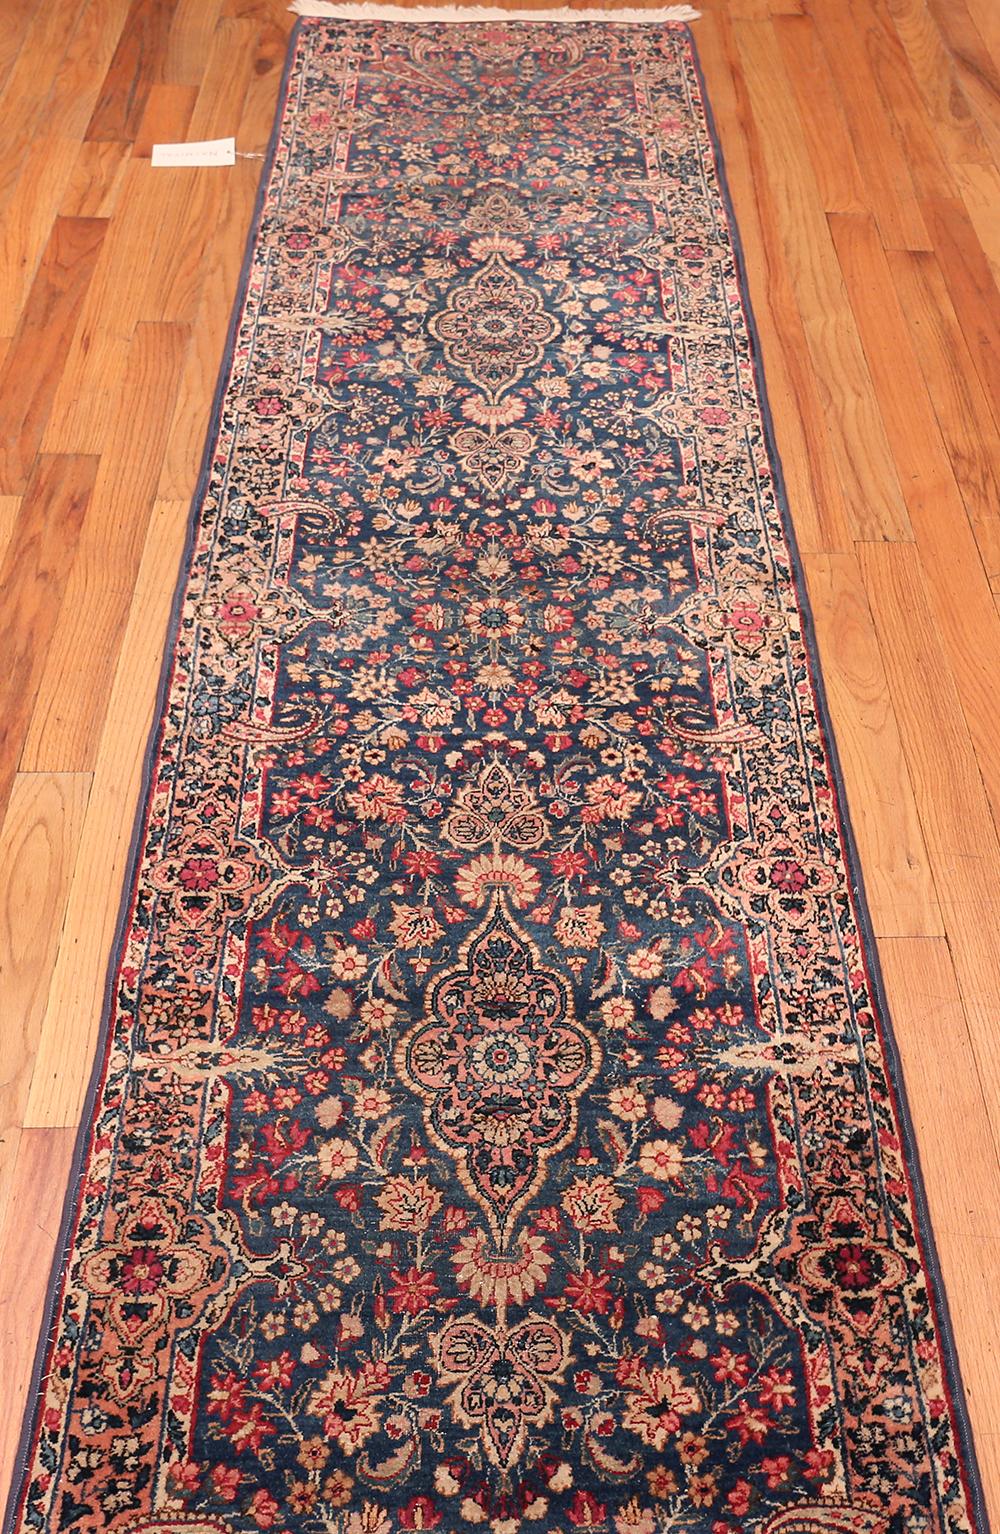 Wool Floral Design Antique Persian Kerman Runner Rug. Size: 2 ft 6 in x 25 ft 6 in